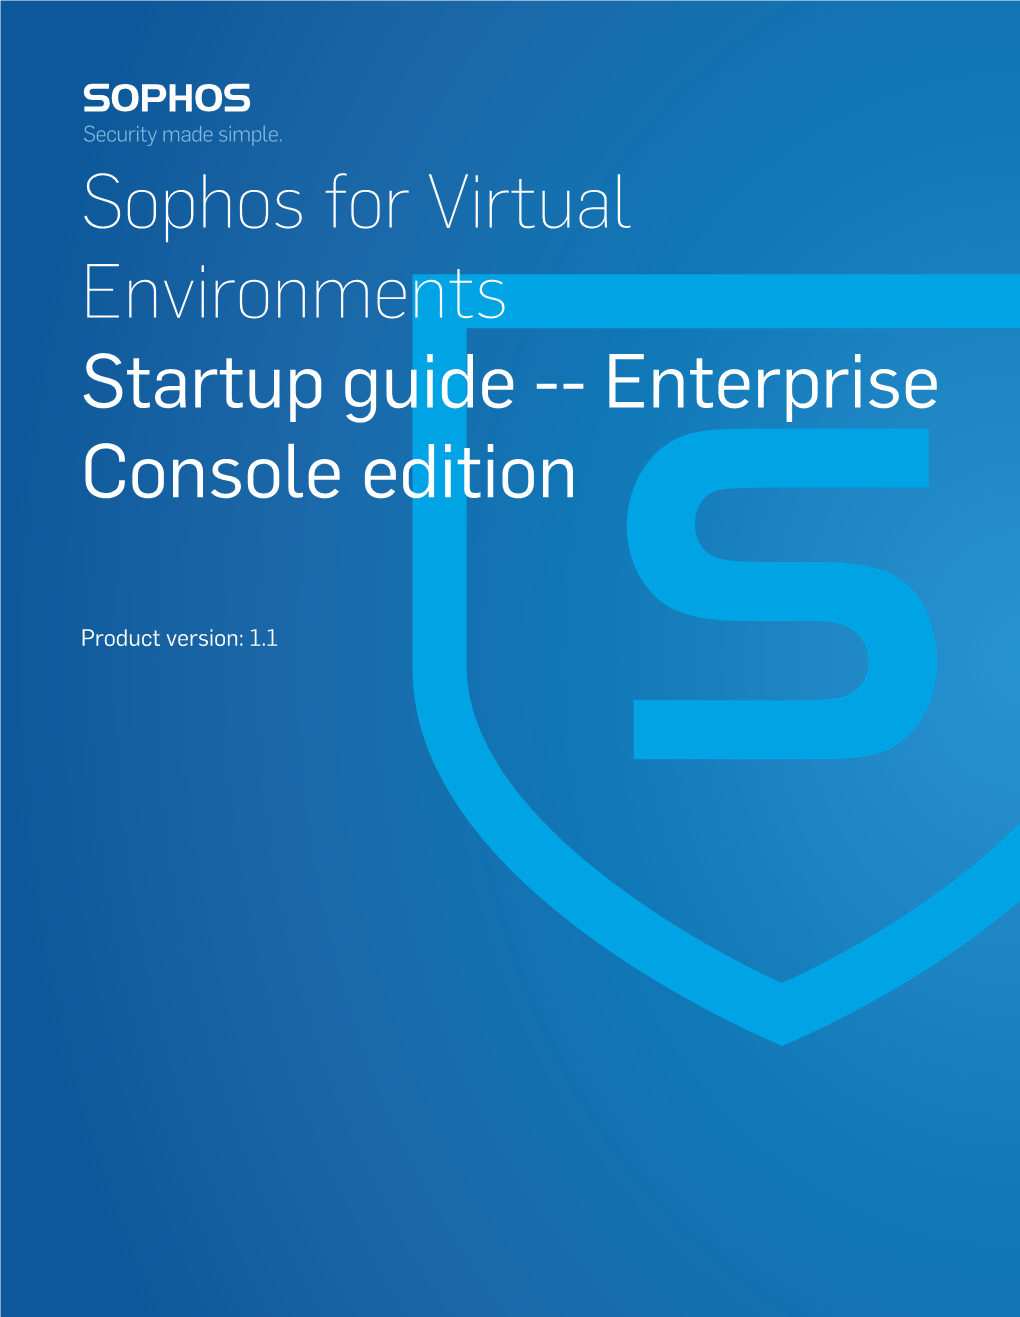 Sophos for Virtual Environments Startup Guide -- Enterprise Console Edition